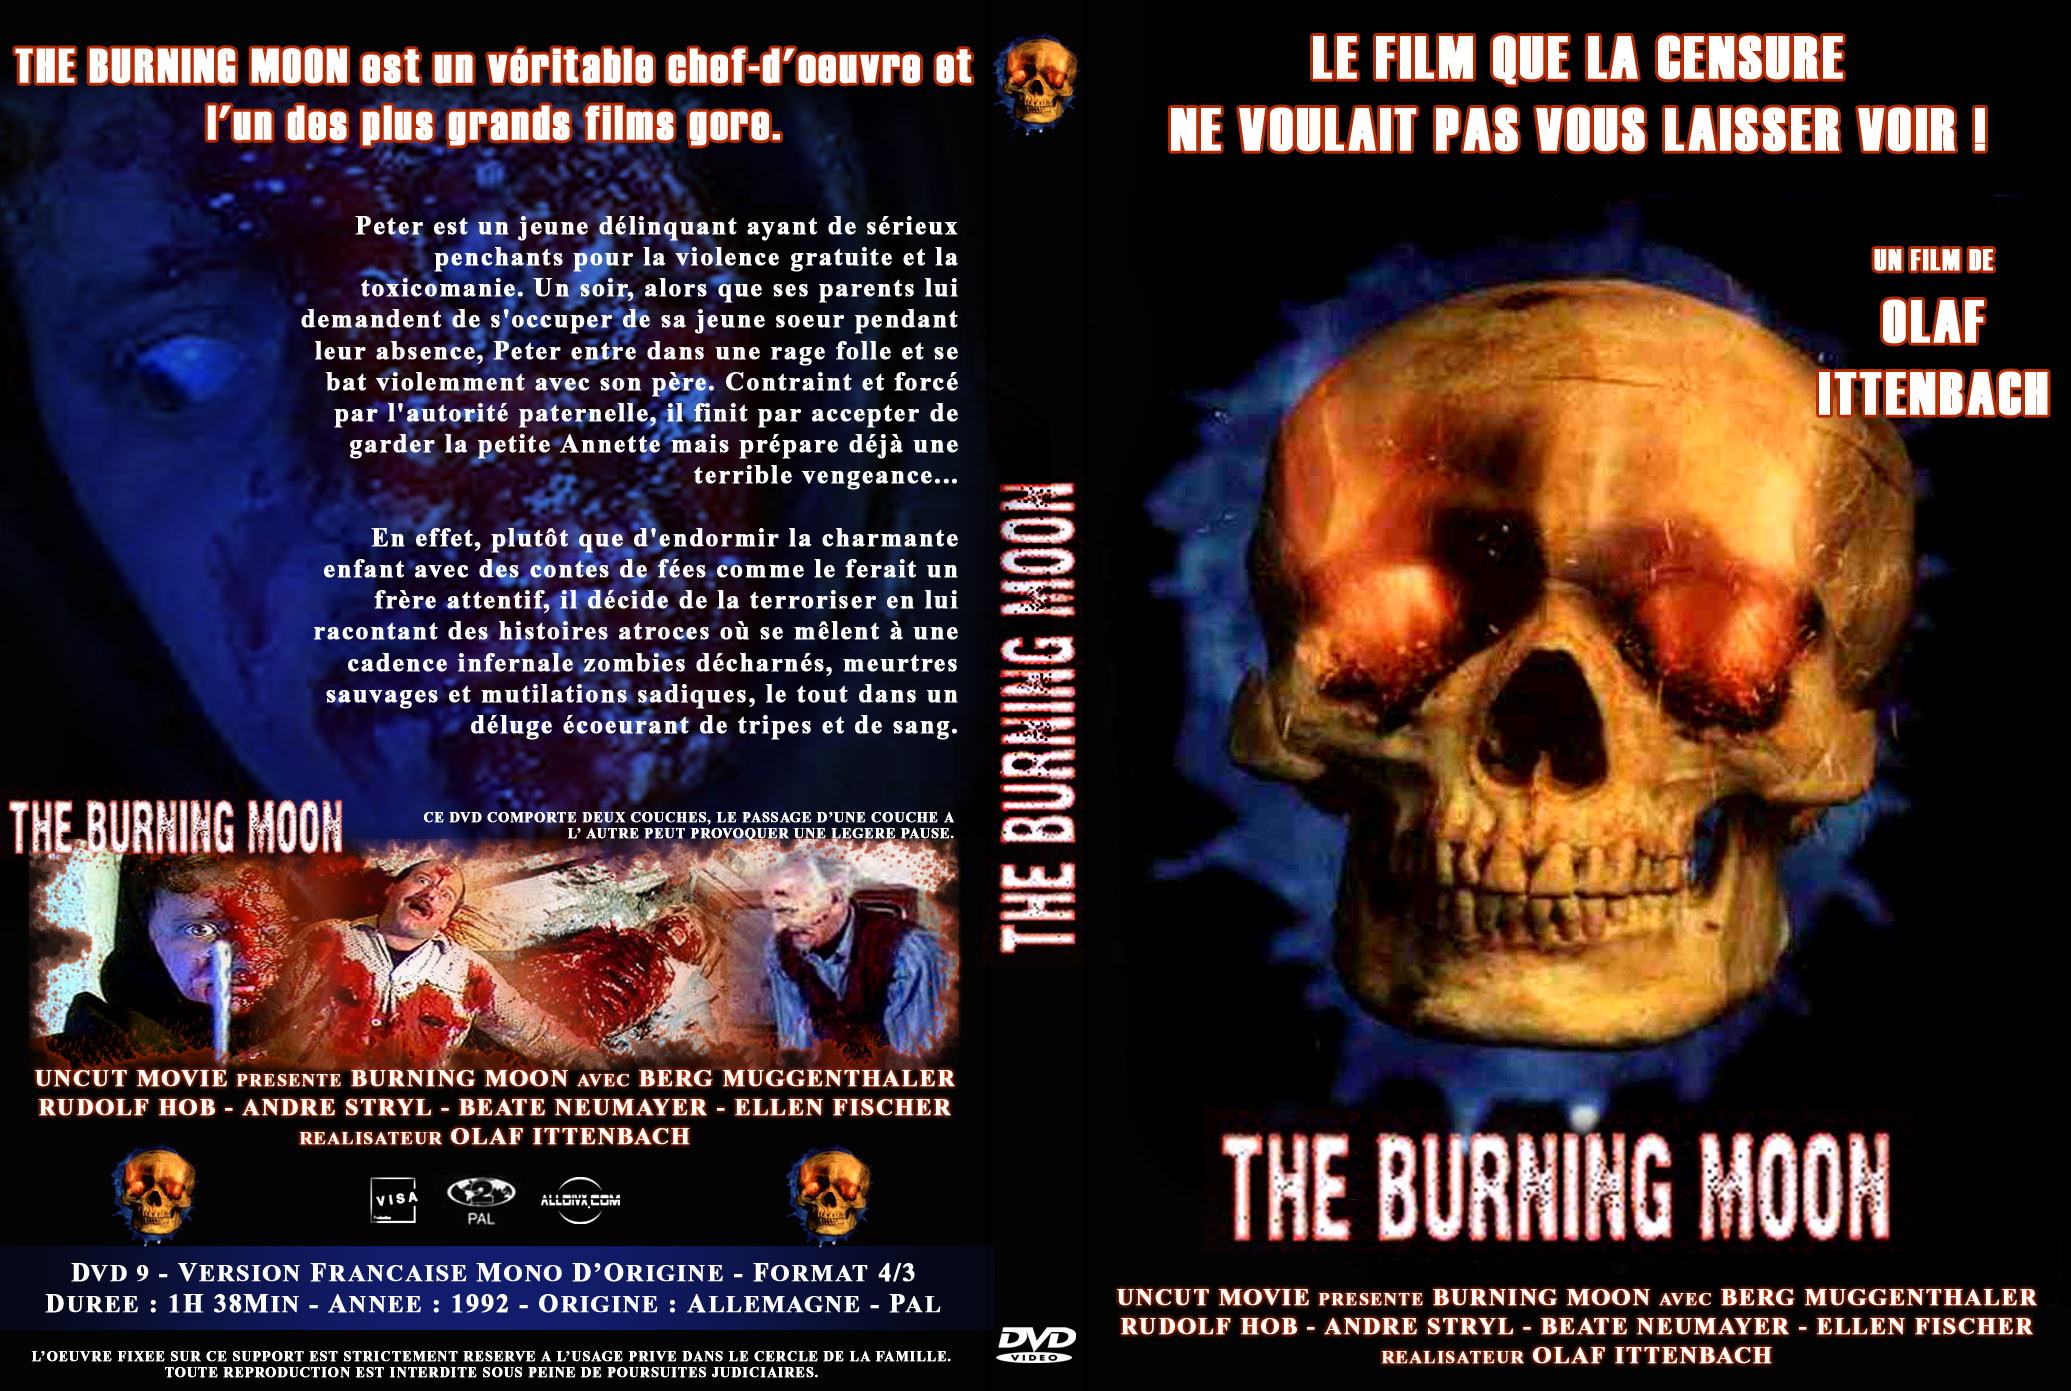 Jaquette DVD The Burning Moon custom